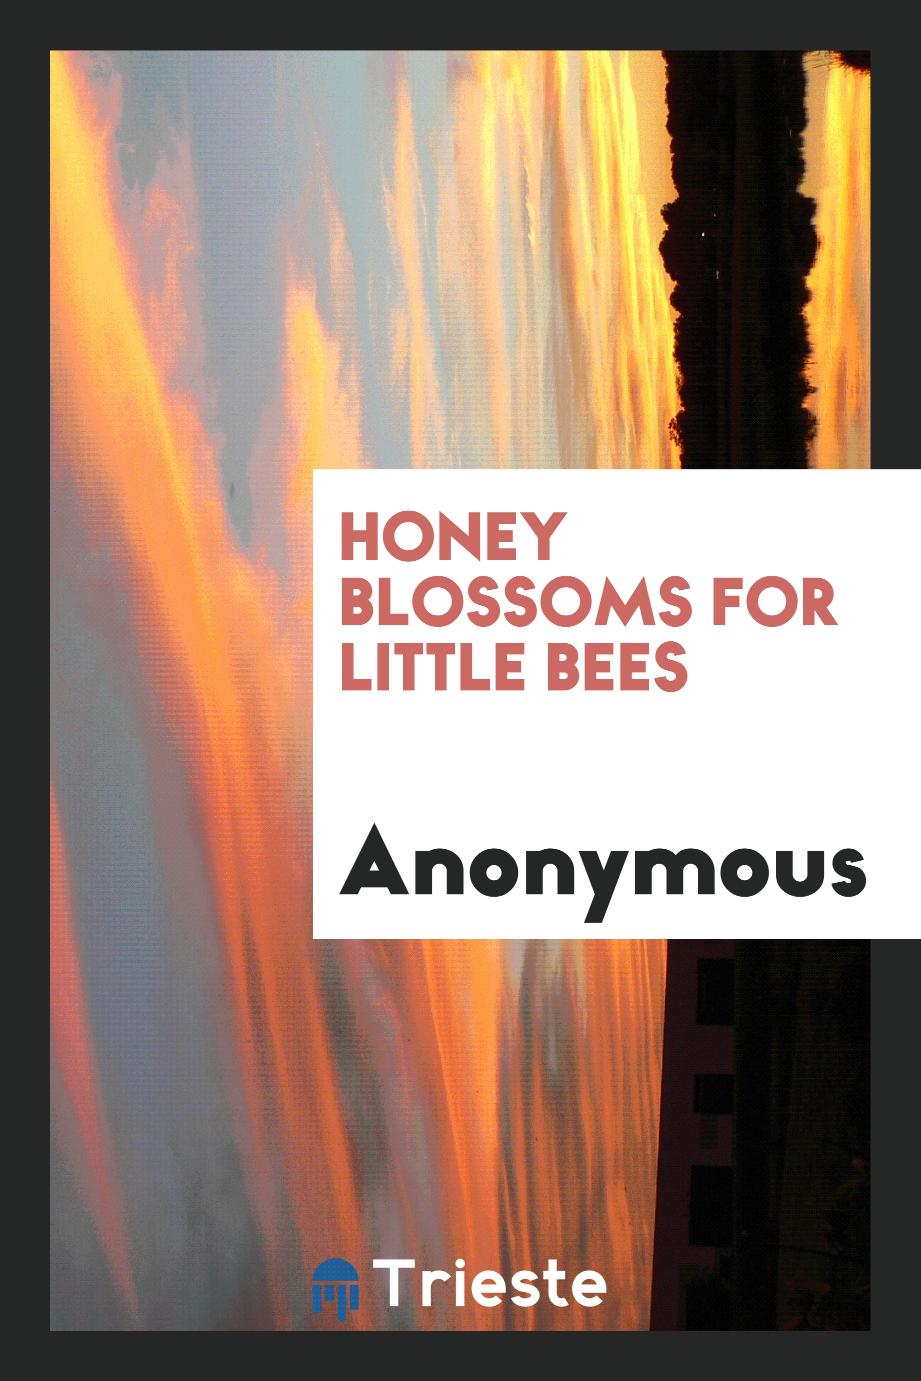 Honey blossoms for little bees